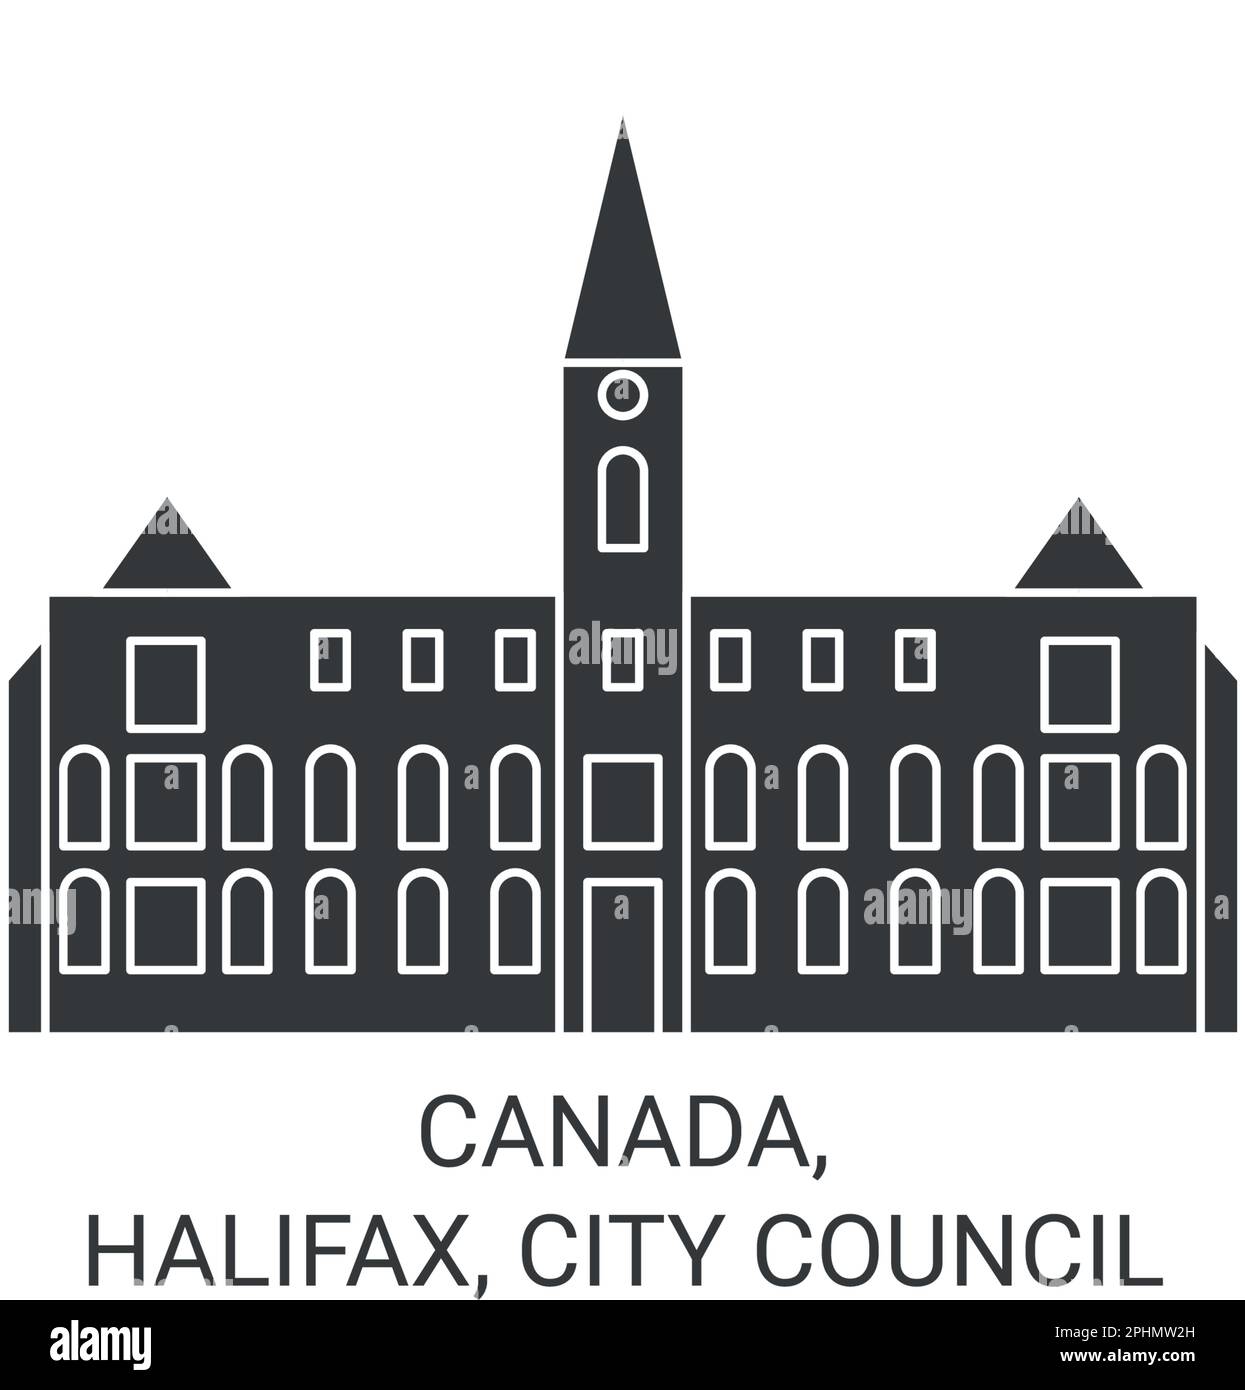 Canada, Halifax, City Council travel landmark vector illustration Stock Vector